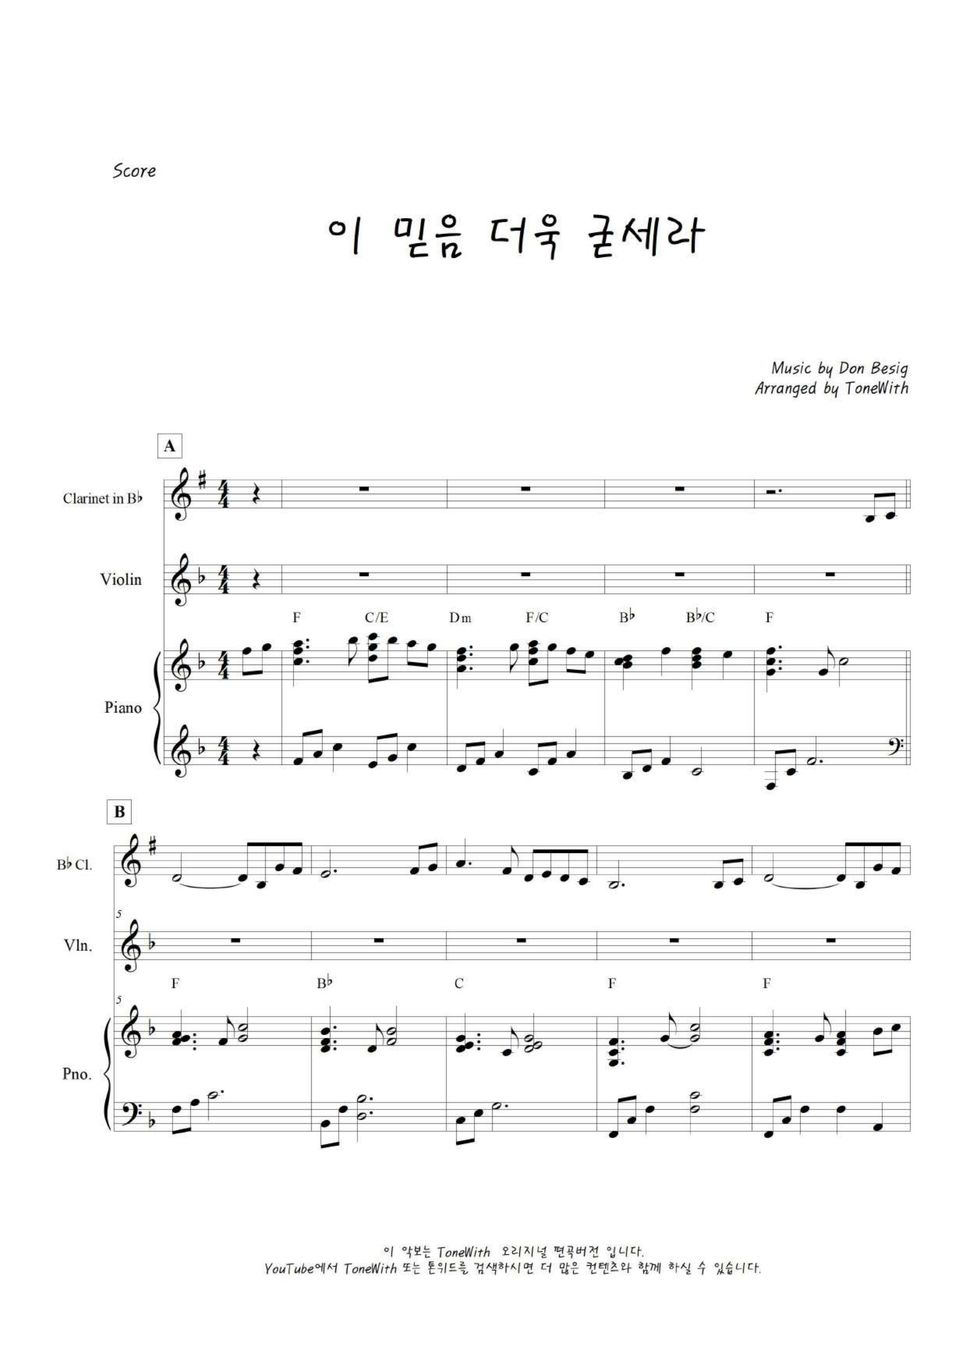 DON BESIG - 이 믿음 더욱 굳세라 (삼중주 / 피아노,클라리넷,바이올린) by ToneWith 톤위드